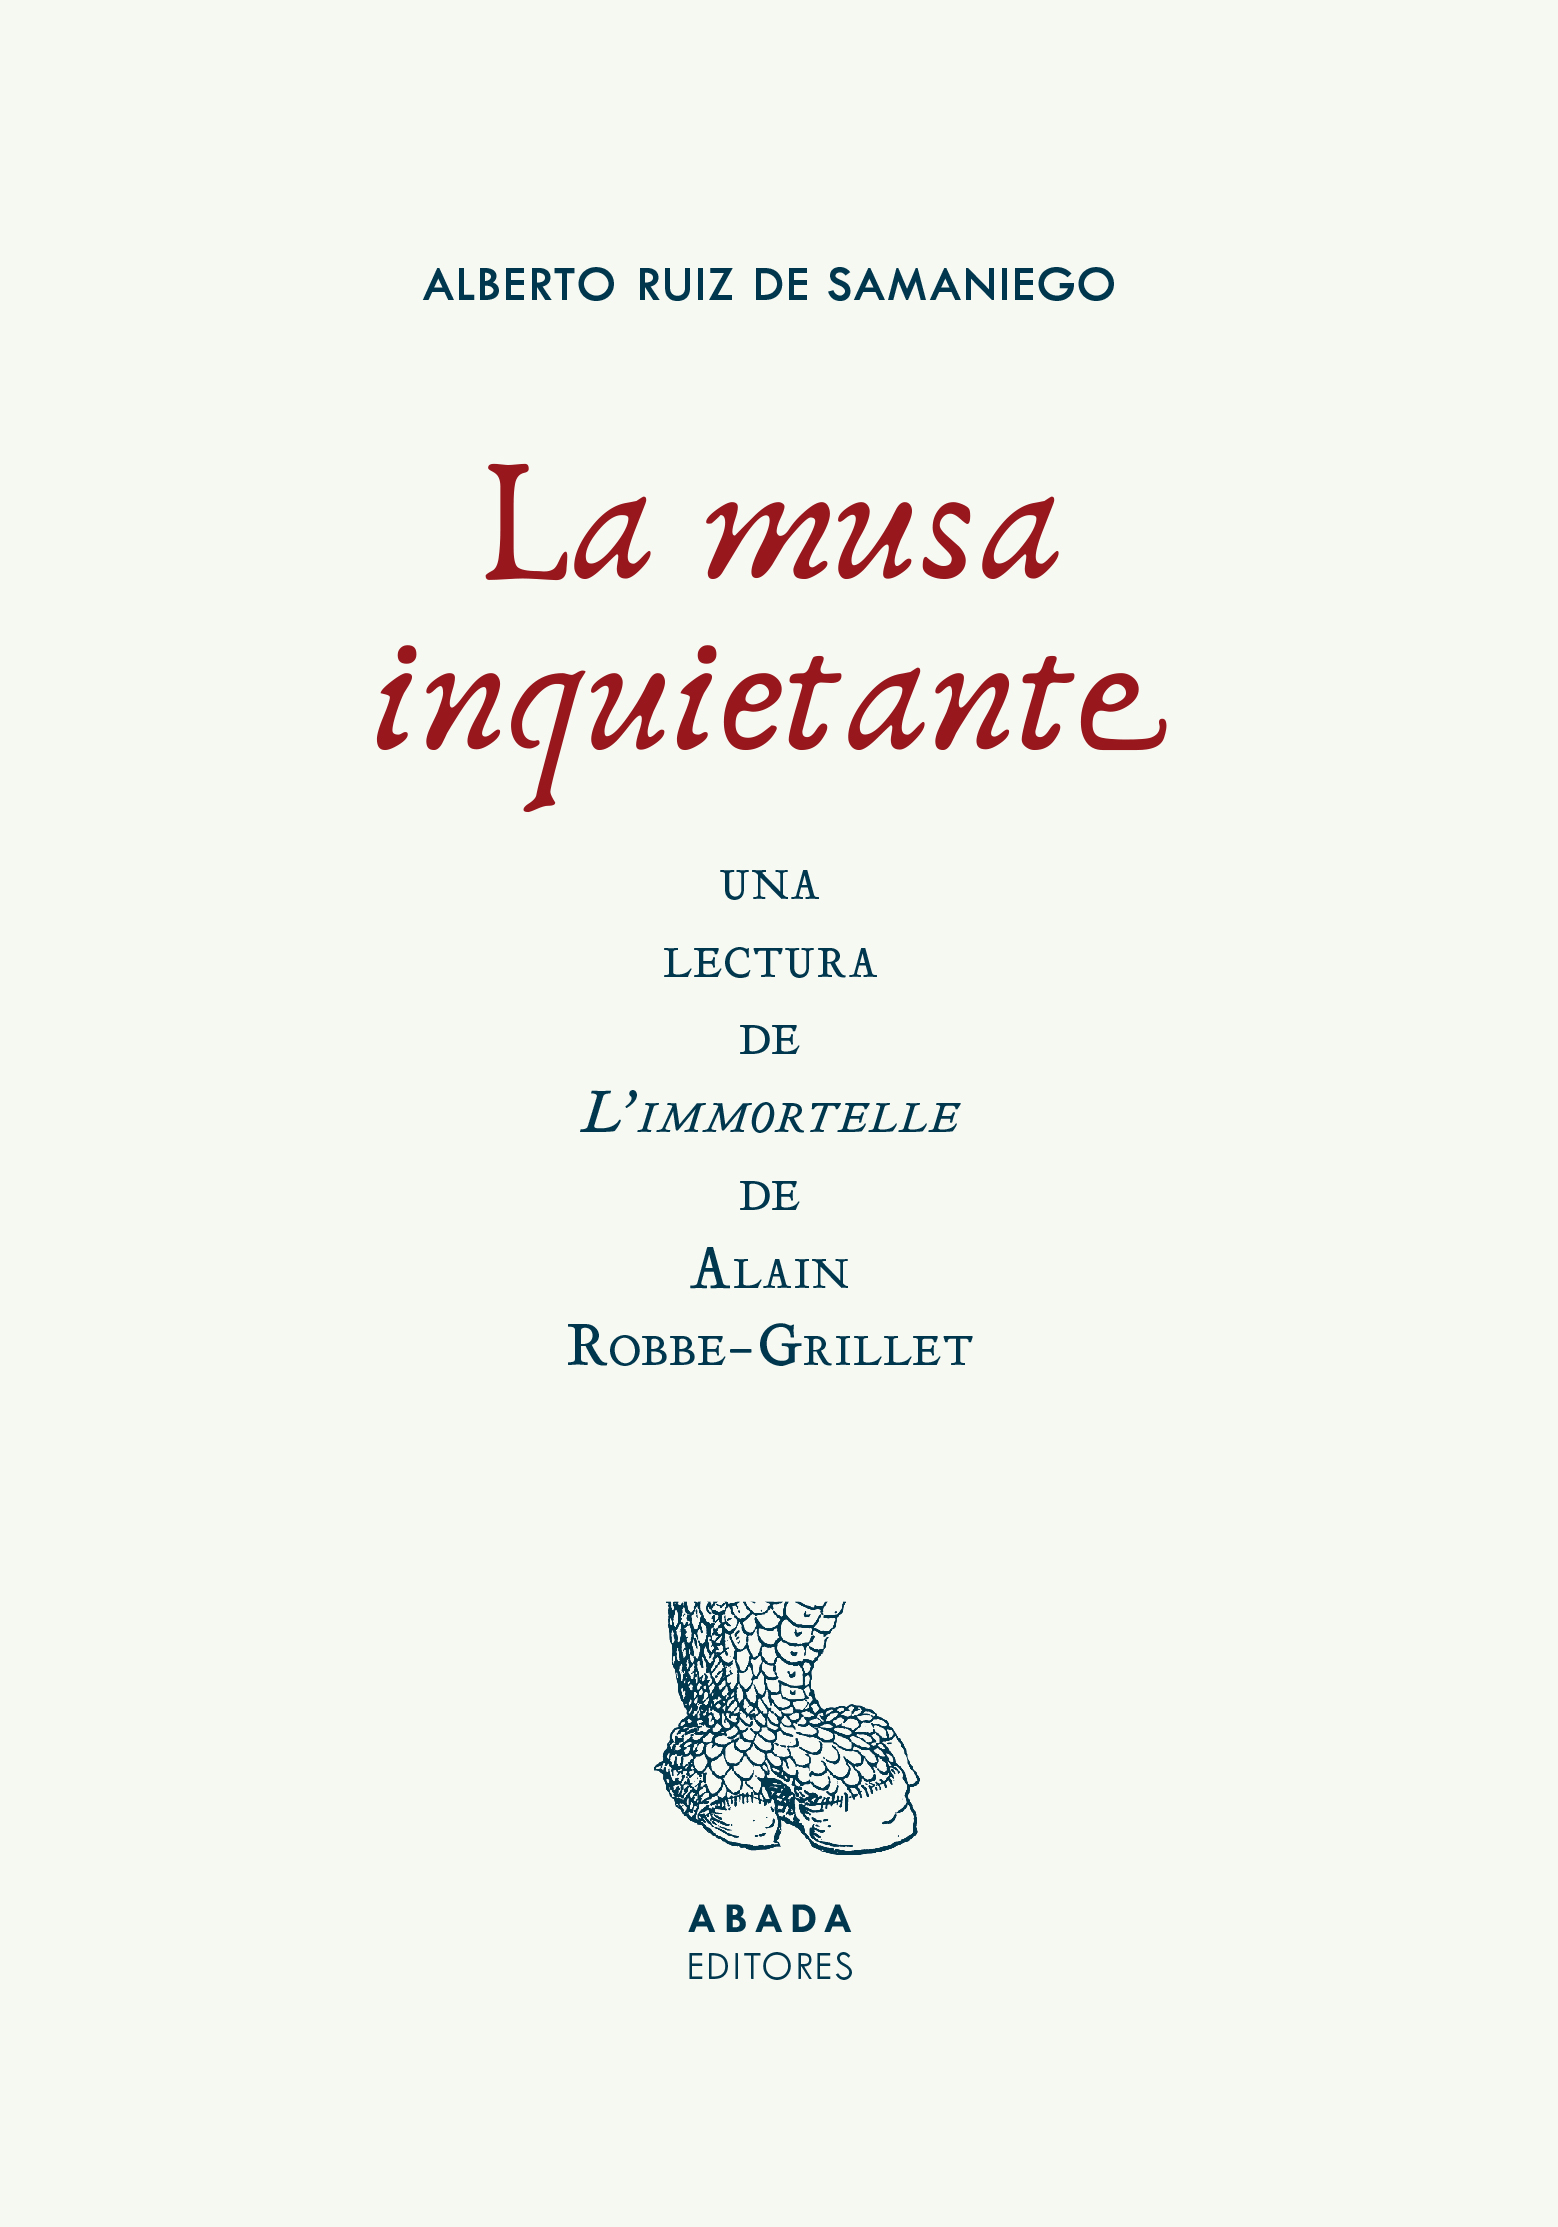 La musa inquietante   «Una lectura de L'immortelle de Alain Robbe-Grillet»